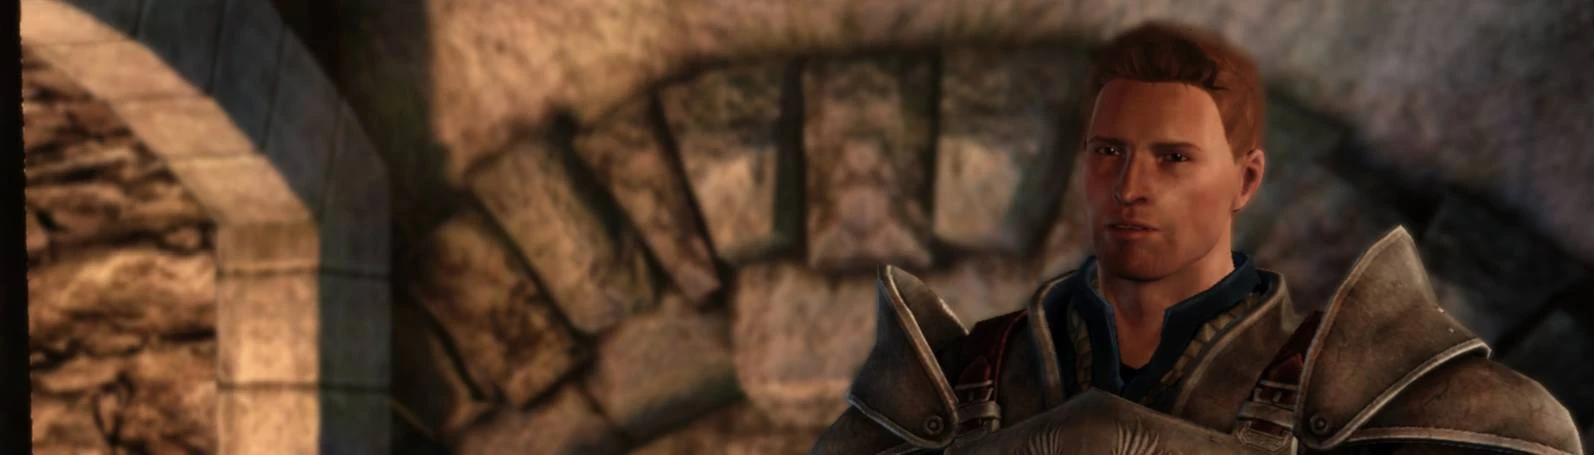 Dragon Age: Origins For Consoles Will Be True Conversion - The